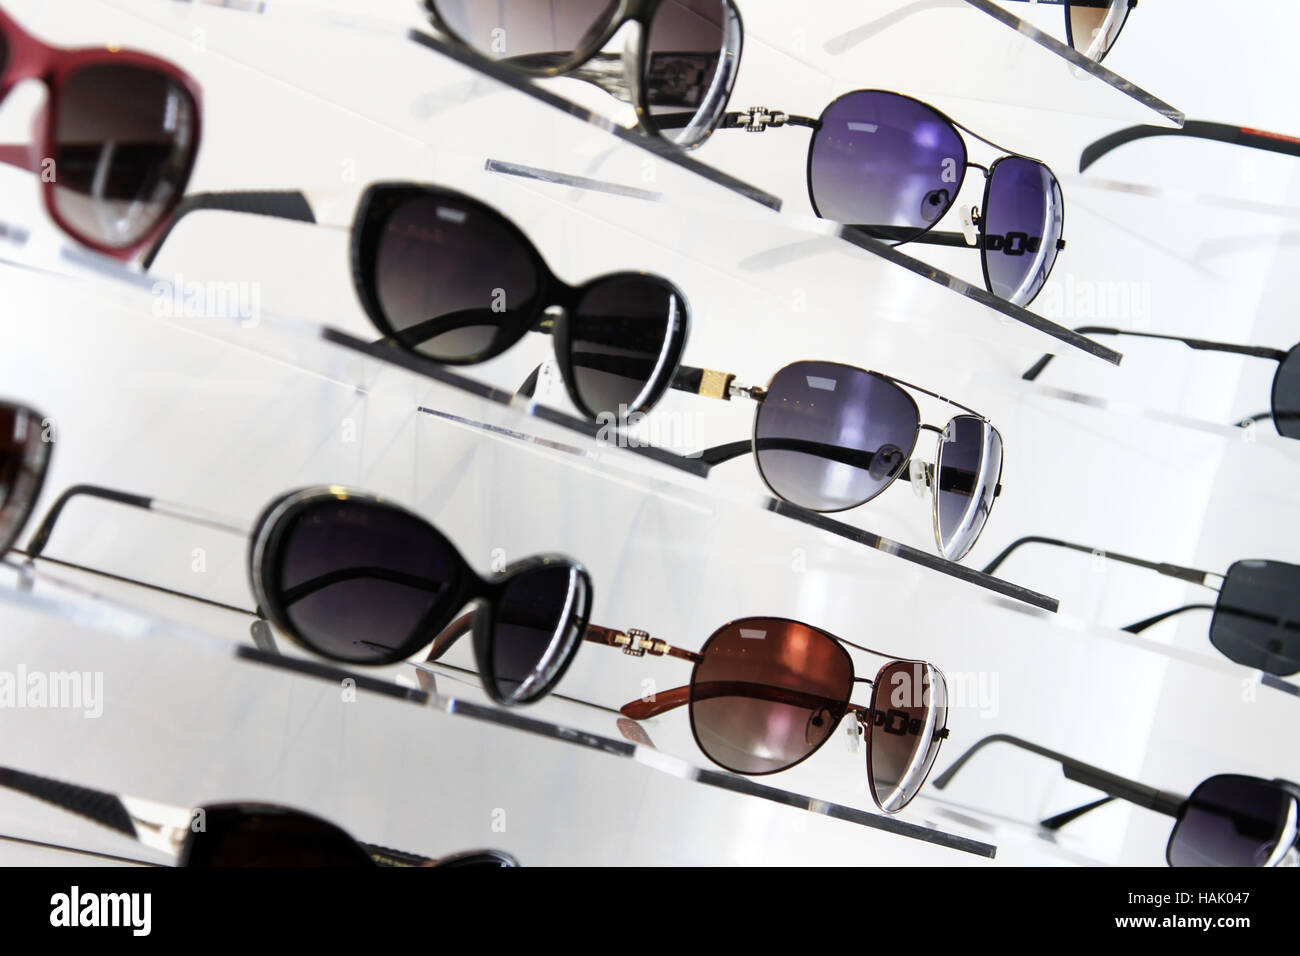 shop shelves with sunglasses Stock Photo